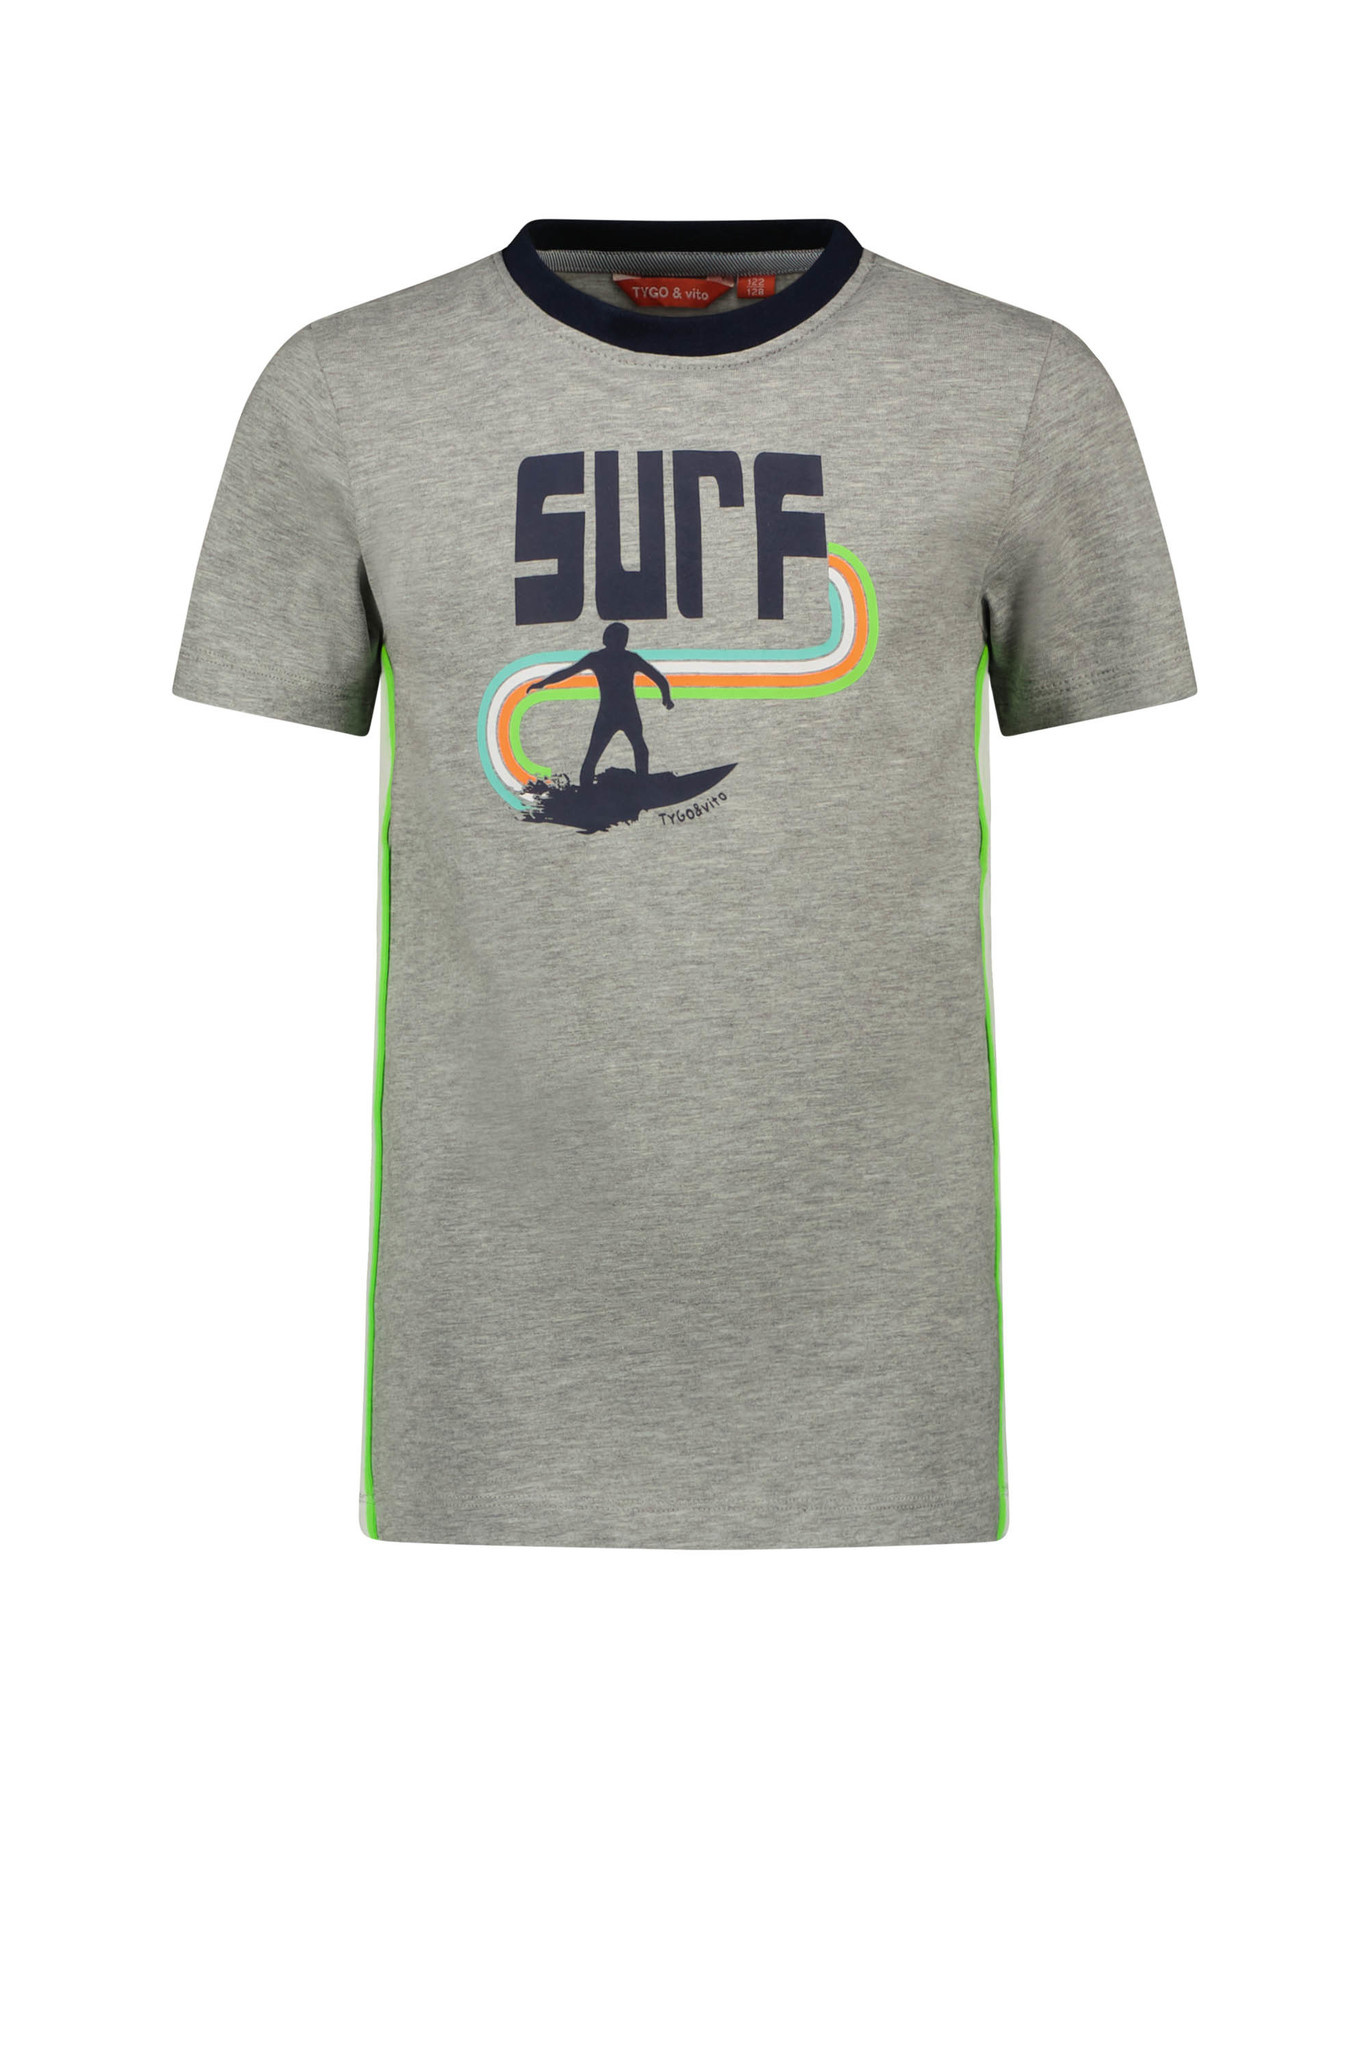 TYGO & vito jongens t-shirt met surf print Grey Melee